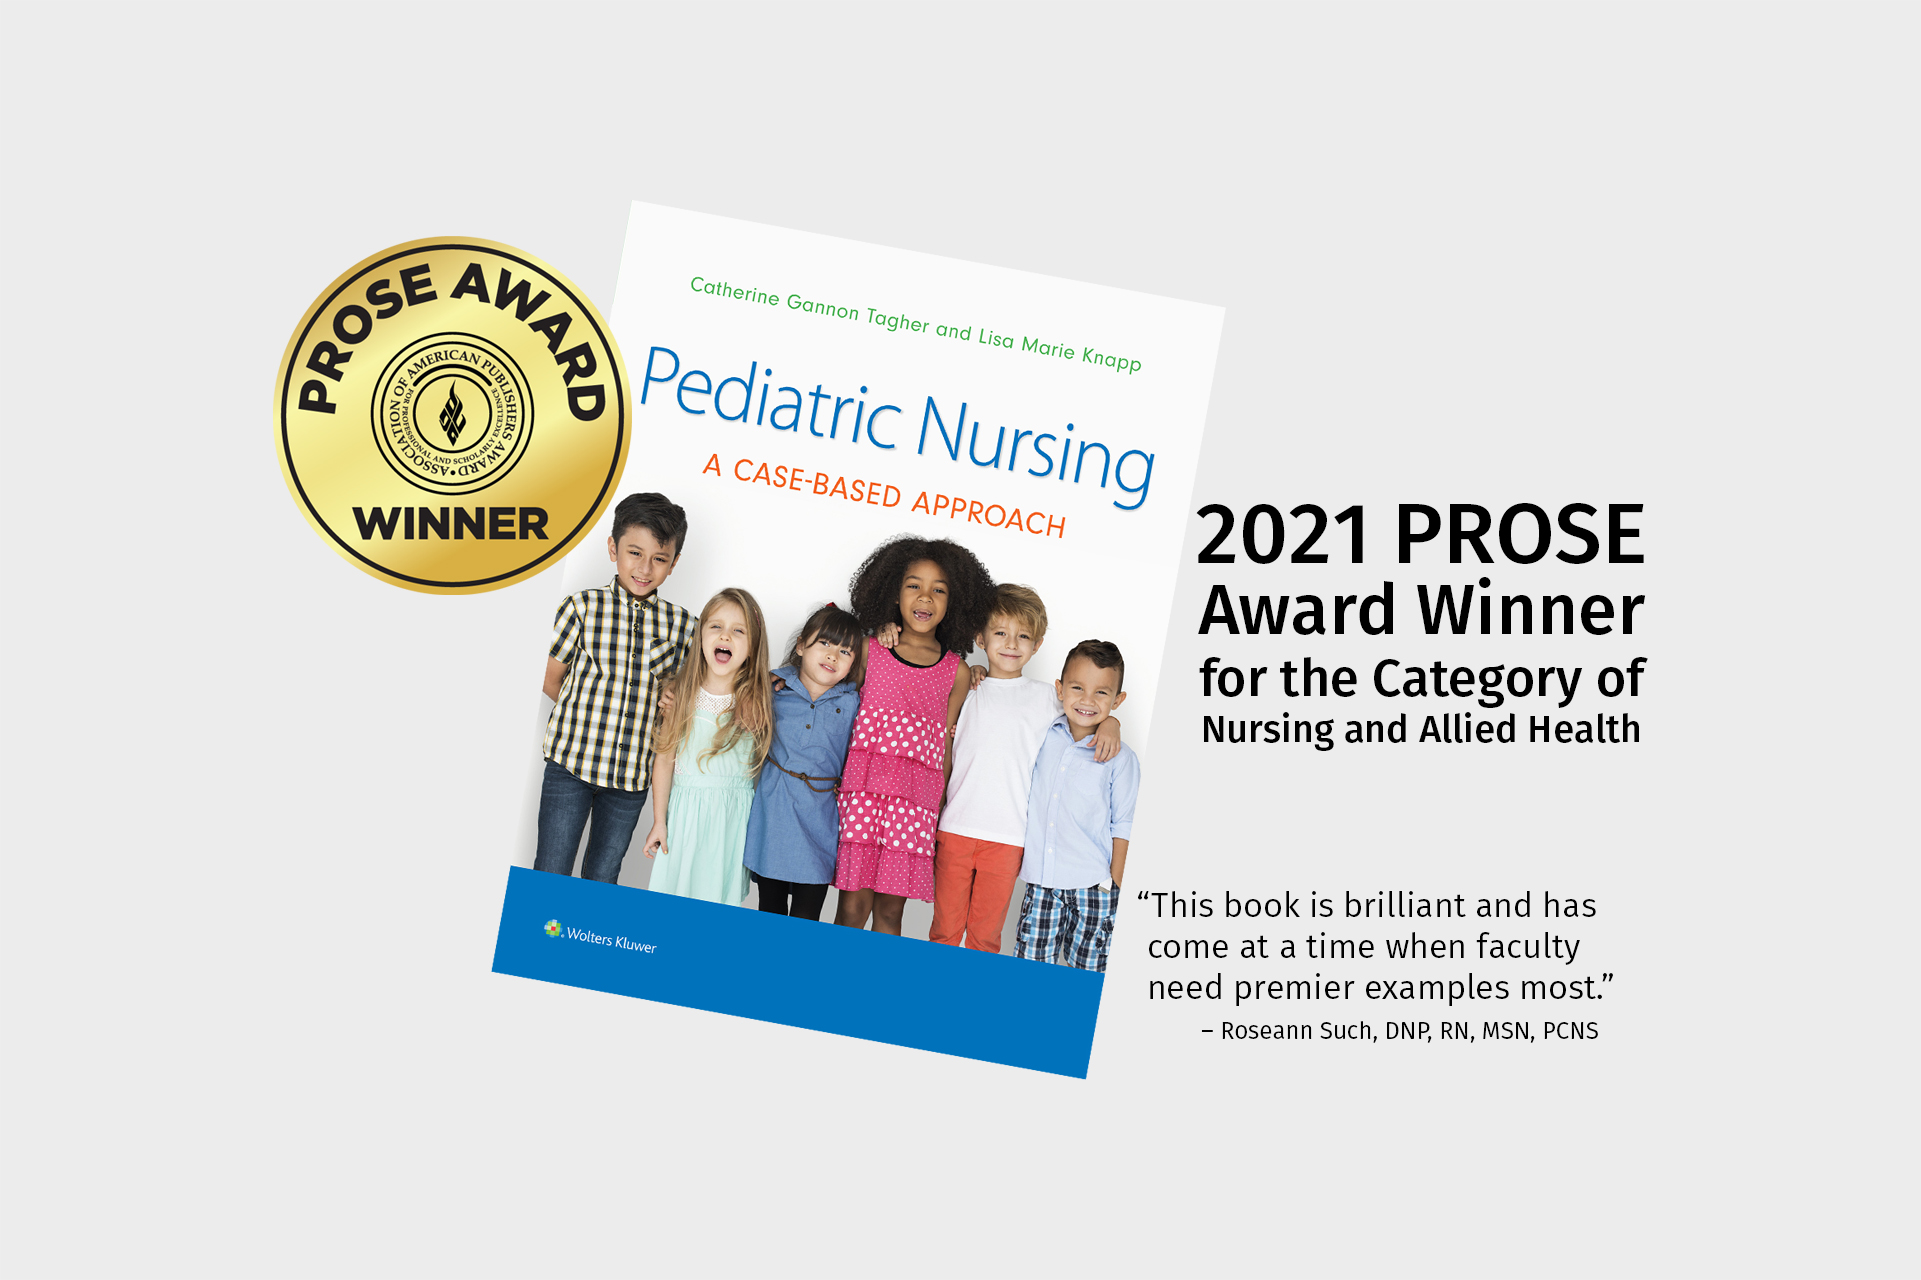 Pediatric Nursing: A Case-Based Approach book cover